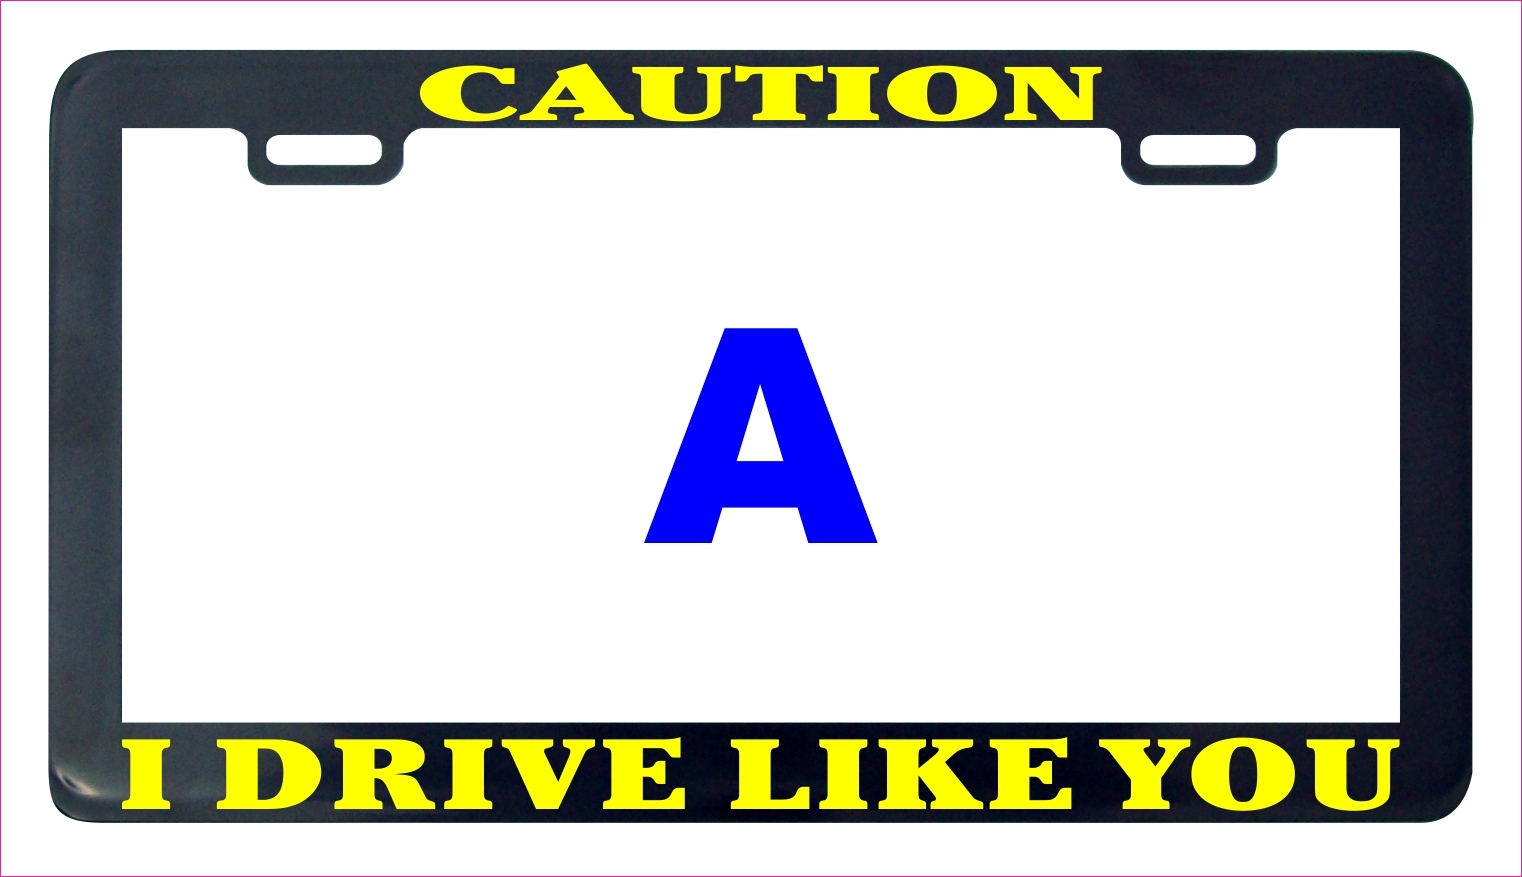 Caution I drive like you funny license plate frame tag - $6.99